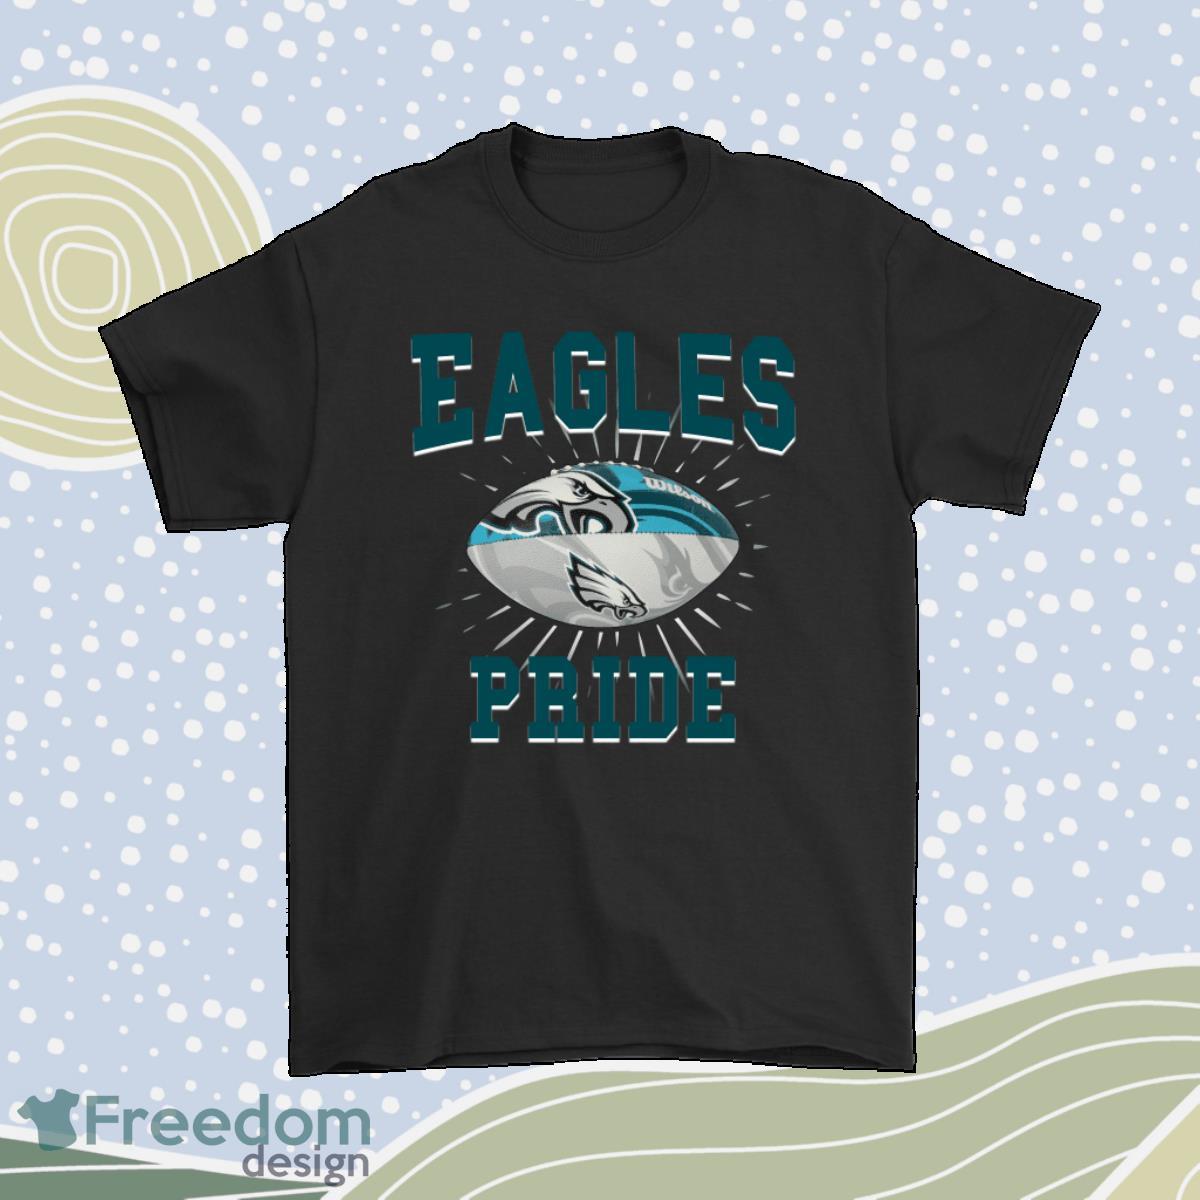 Eagles Pride Proud Of Philadelphia Eagles Football Shirt Product Photo 1